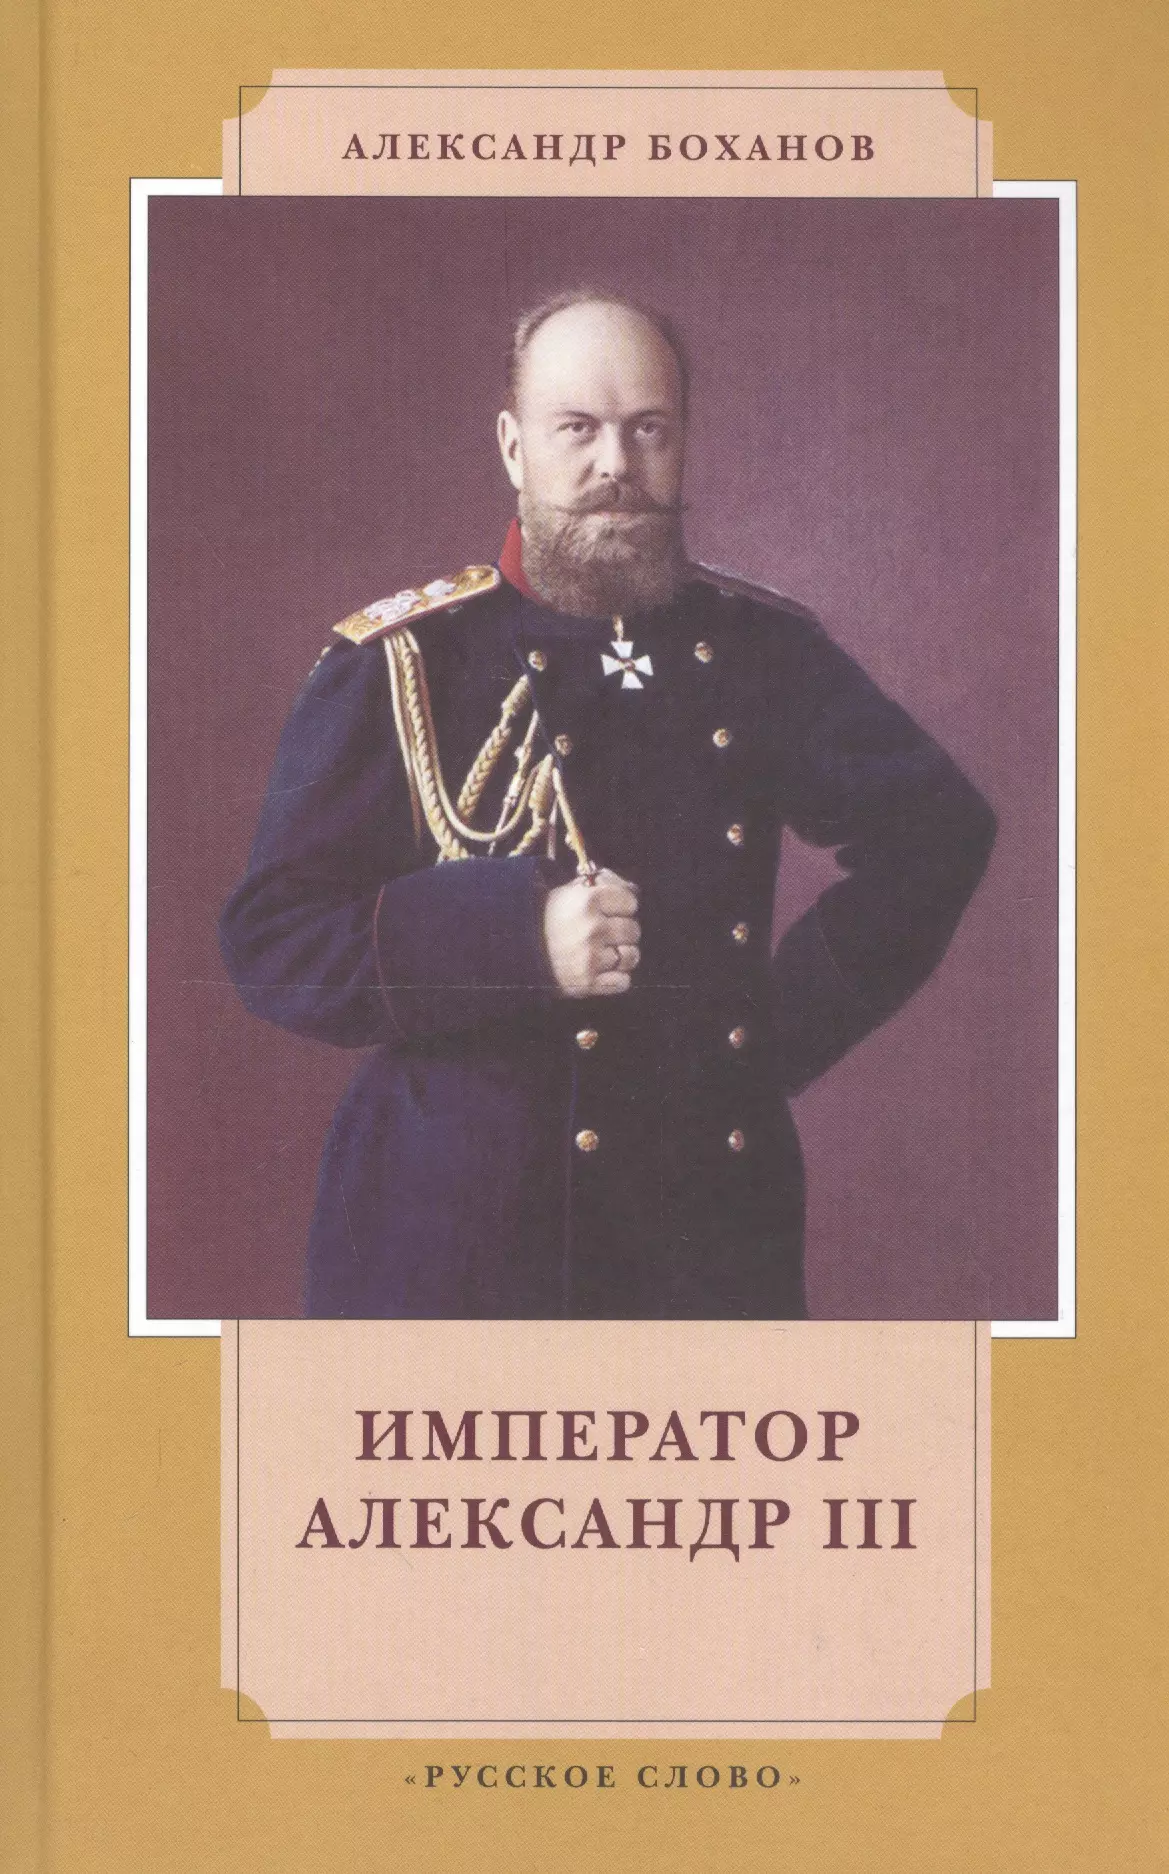 Книга про императора. Боханов, а. н. Император III.